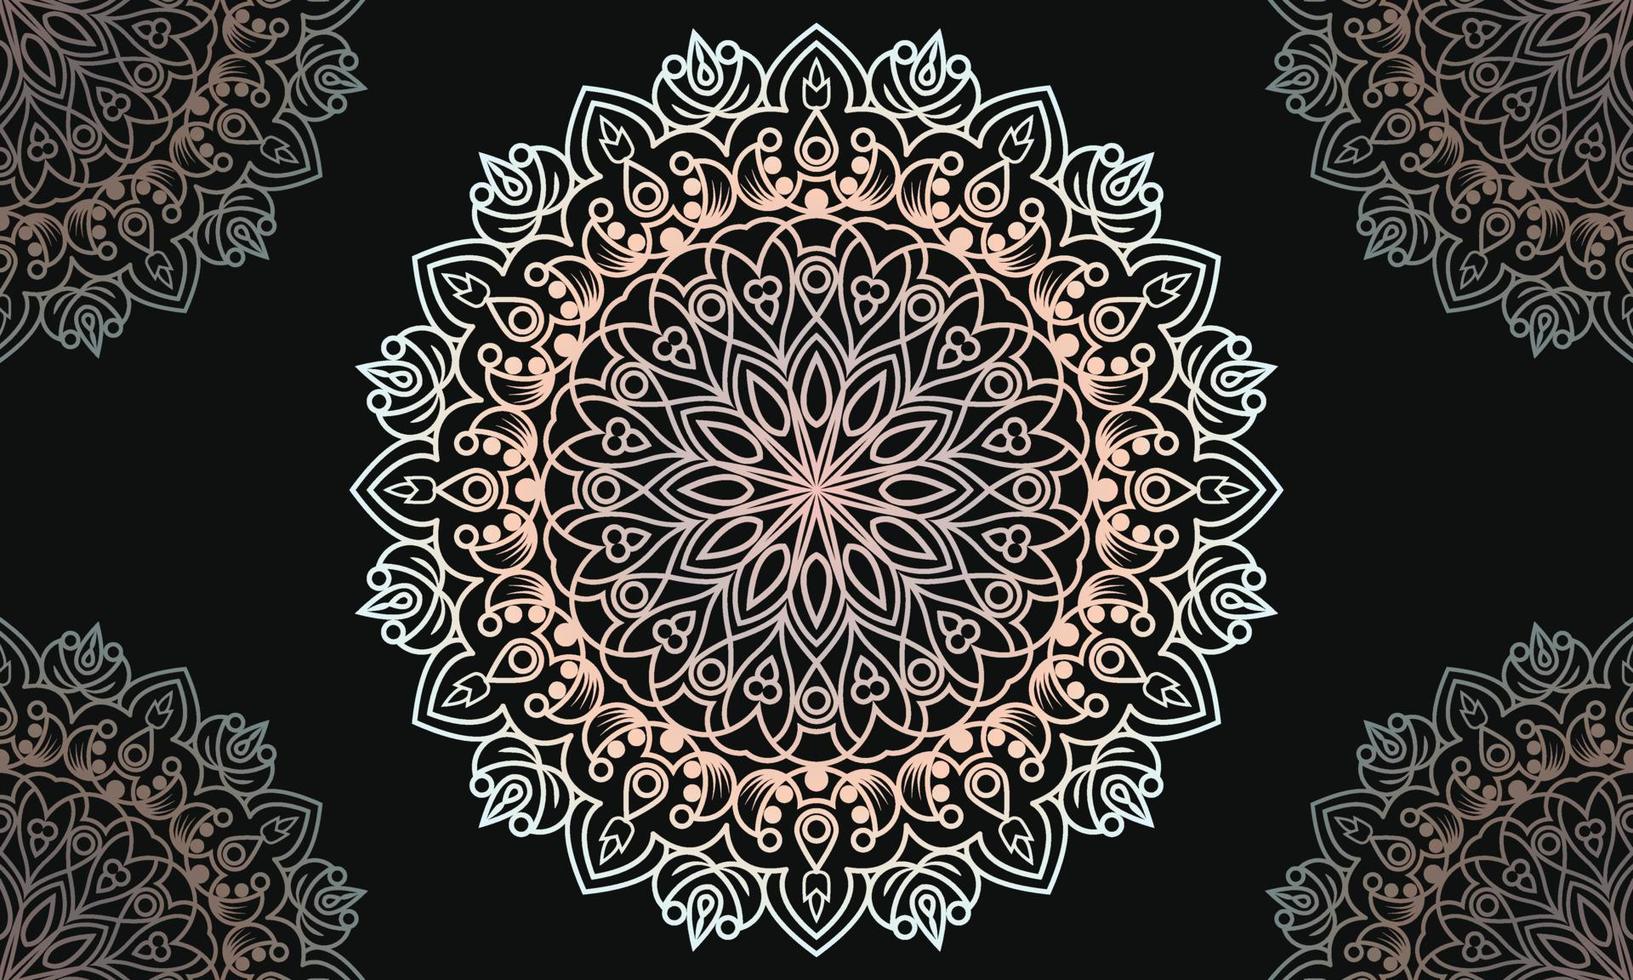 buntes Mandala-Hintergrunddesign. dekoratives Mandala-Design. Mandala-Muster-Design. vektor